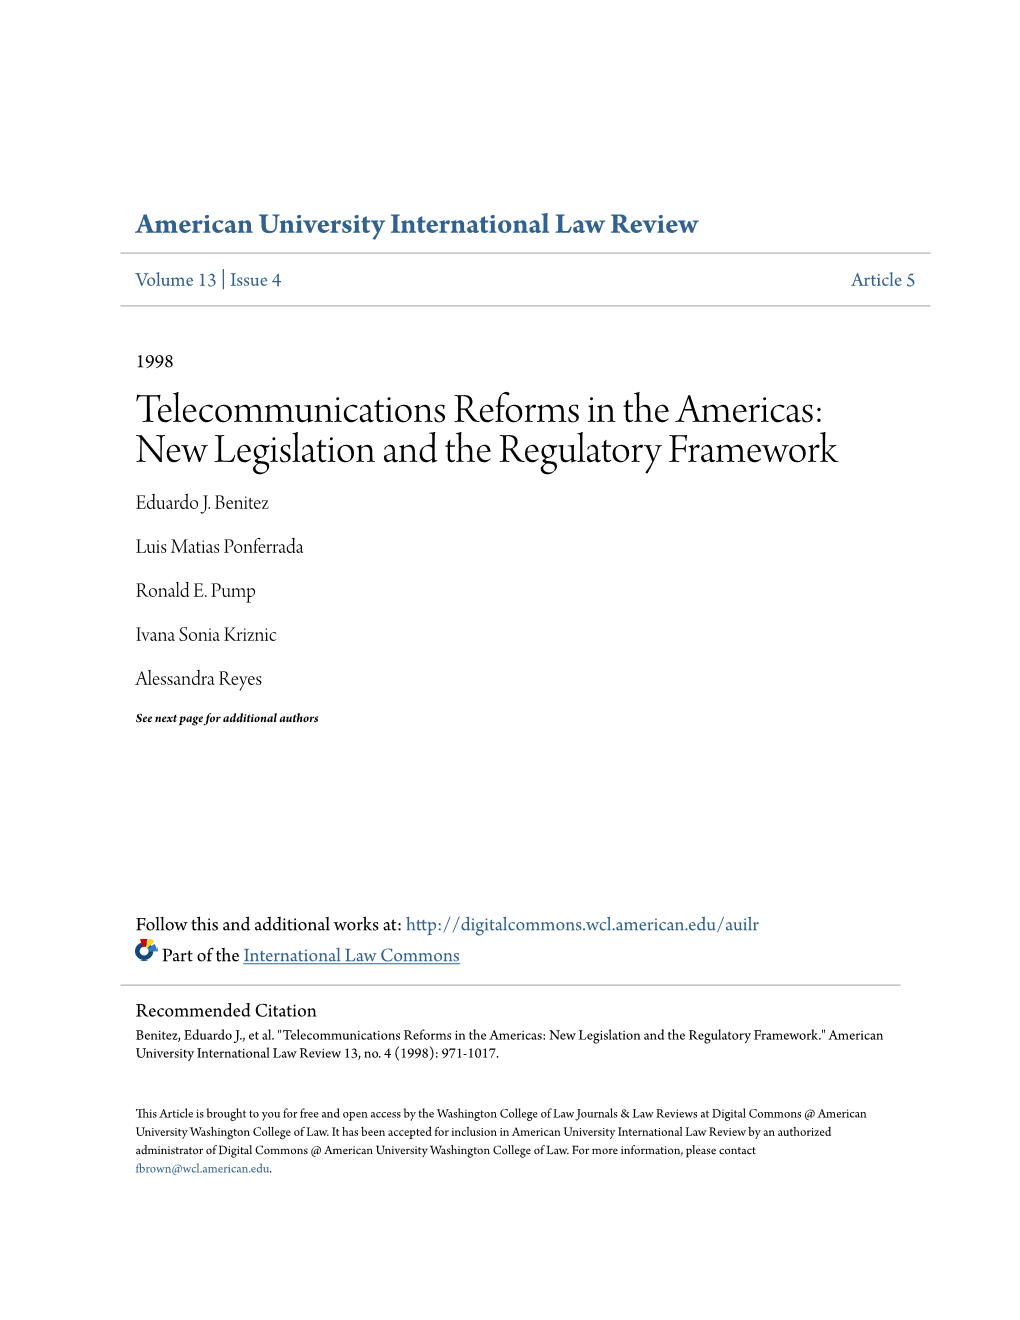 Telecommunications Reforms in the Americas: New Legislation and the Regulatory Framework Eduardo J